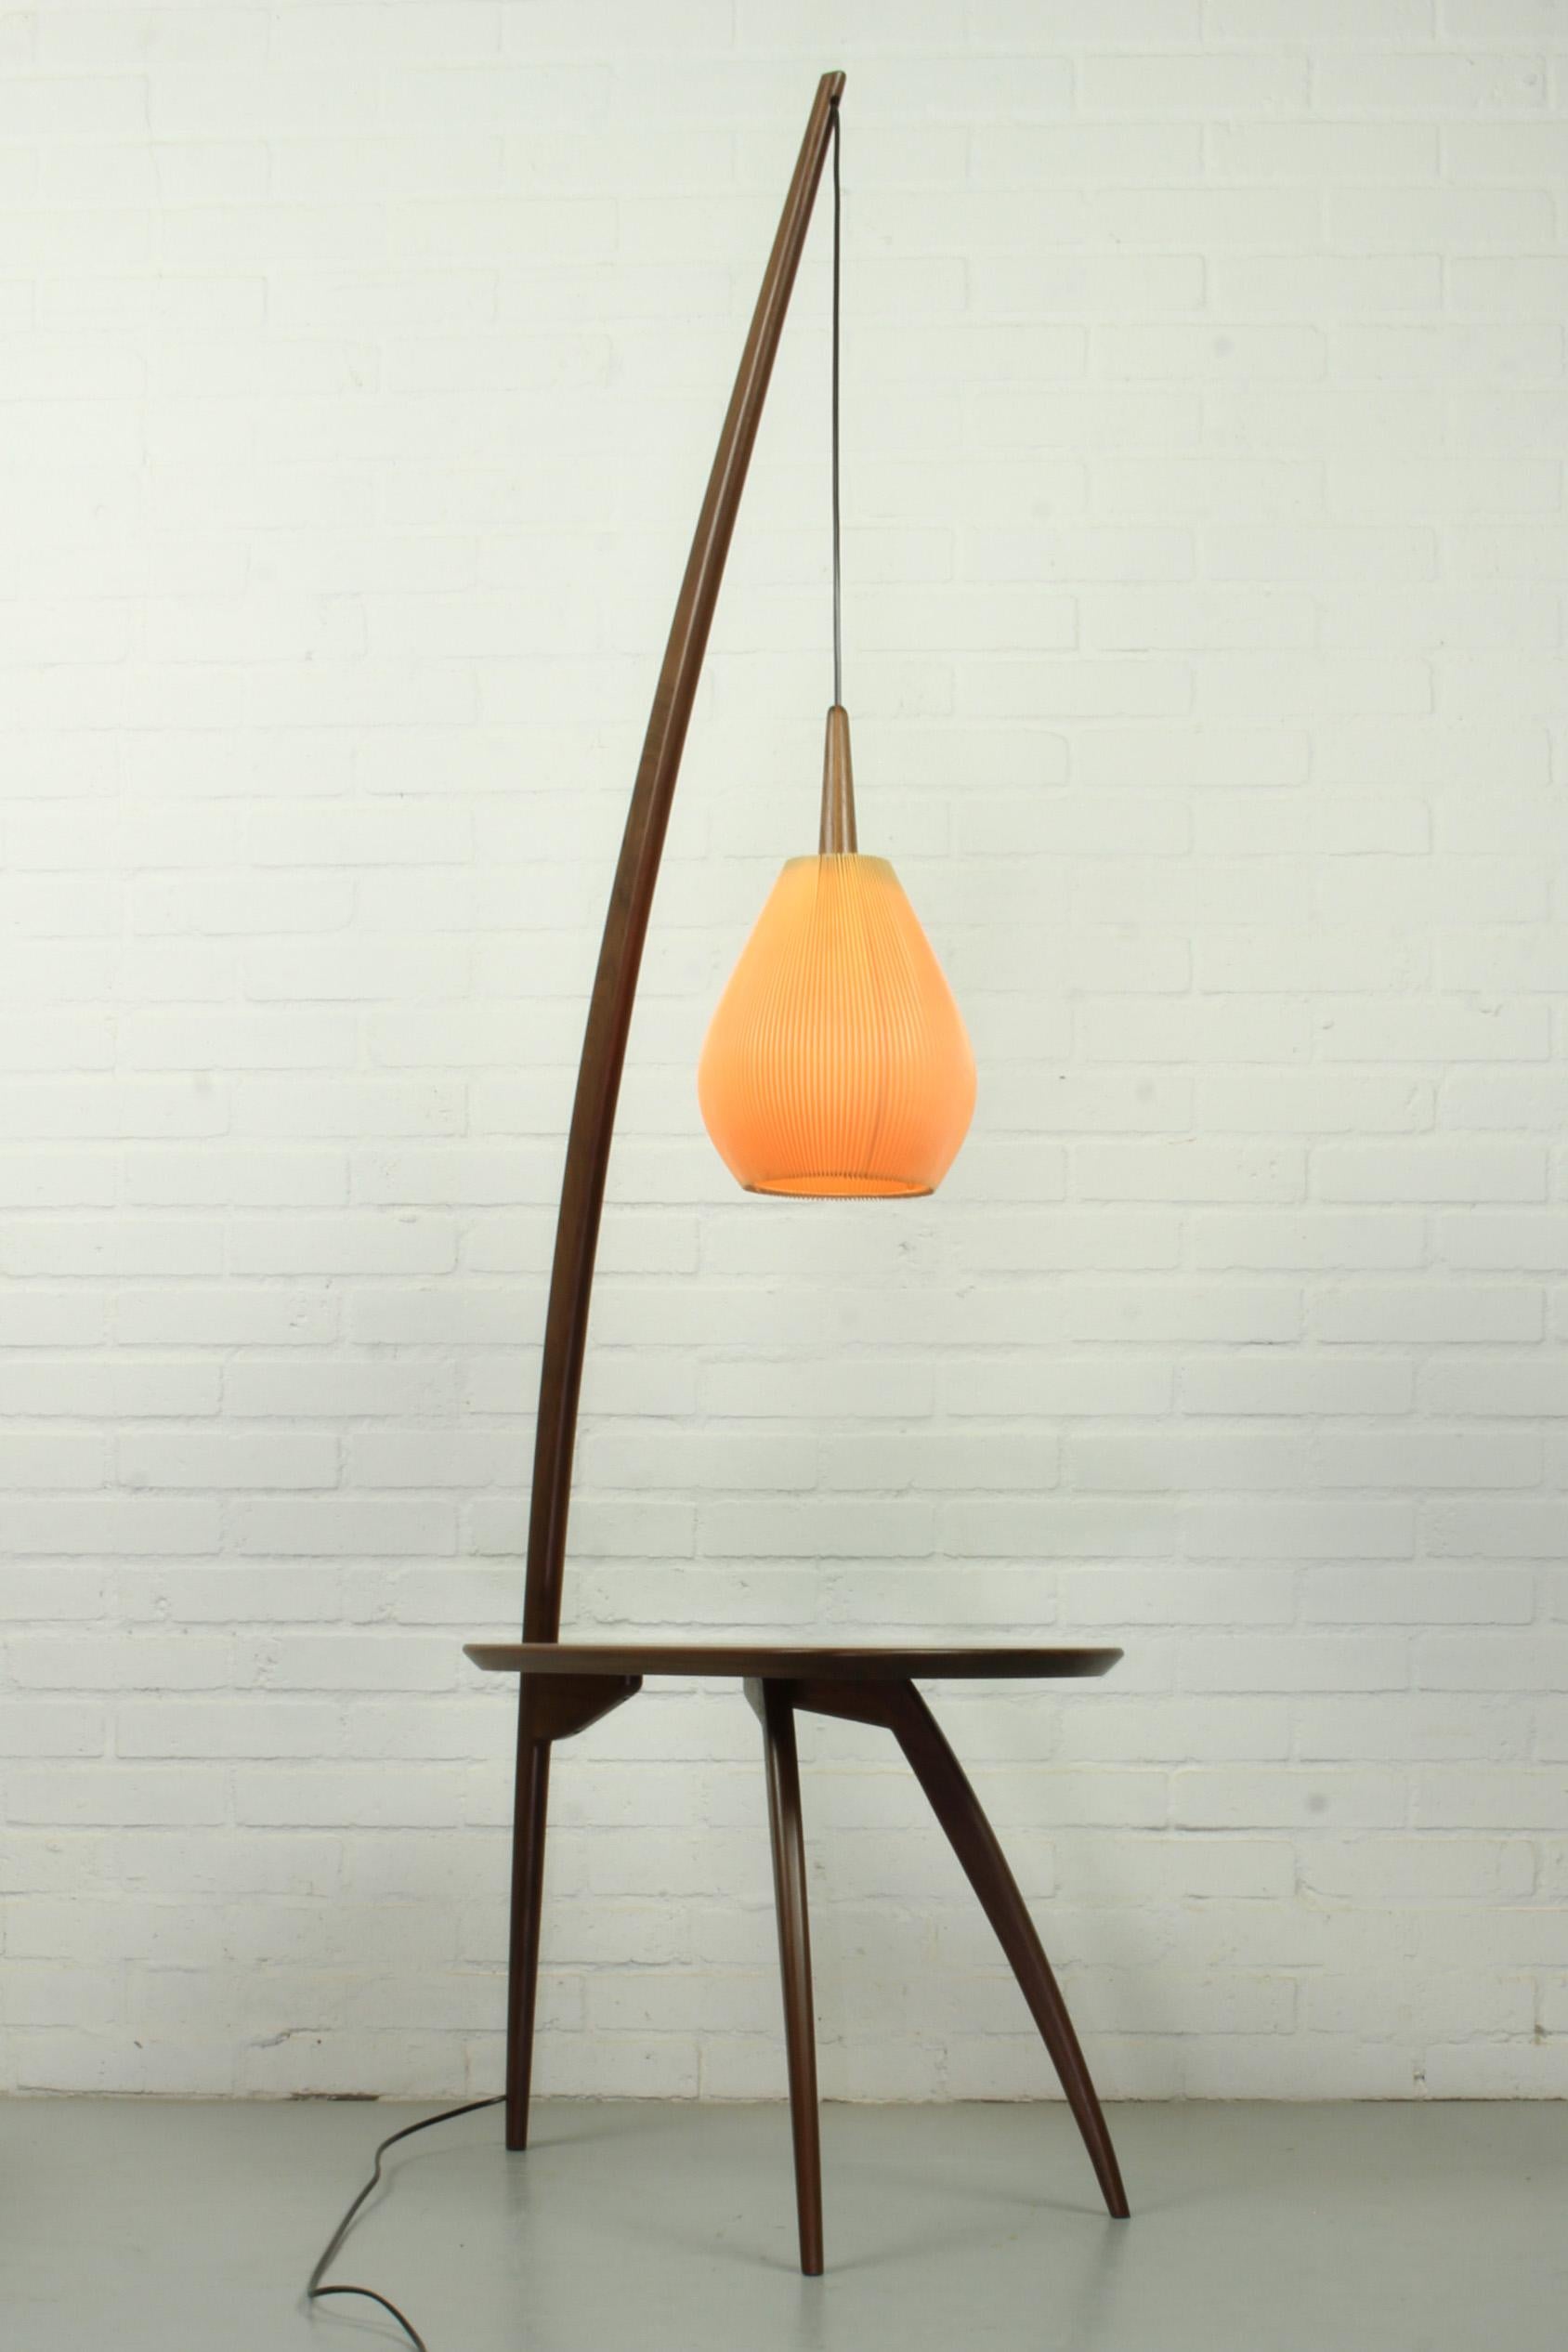 20th Century Mid-Century Modern Floor Lamp and American Nut Table